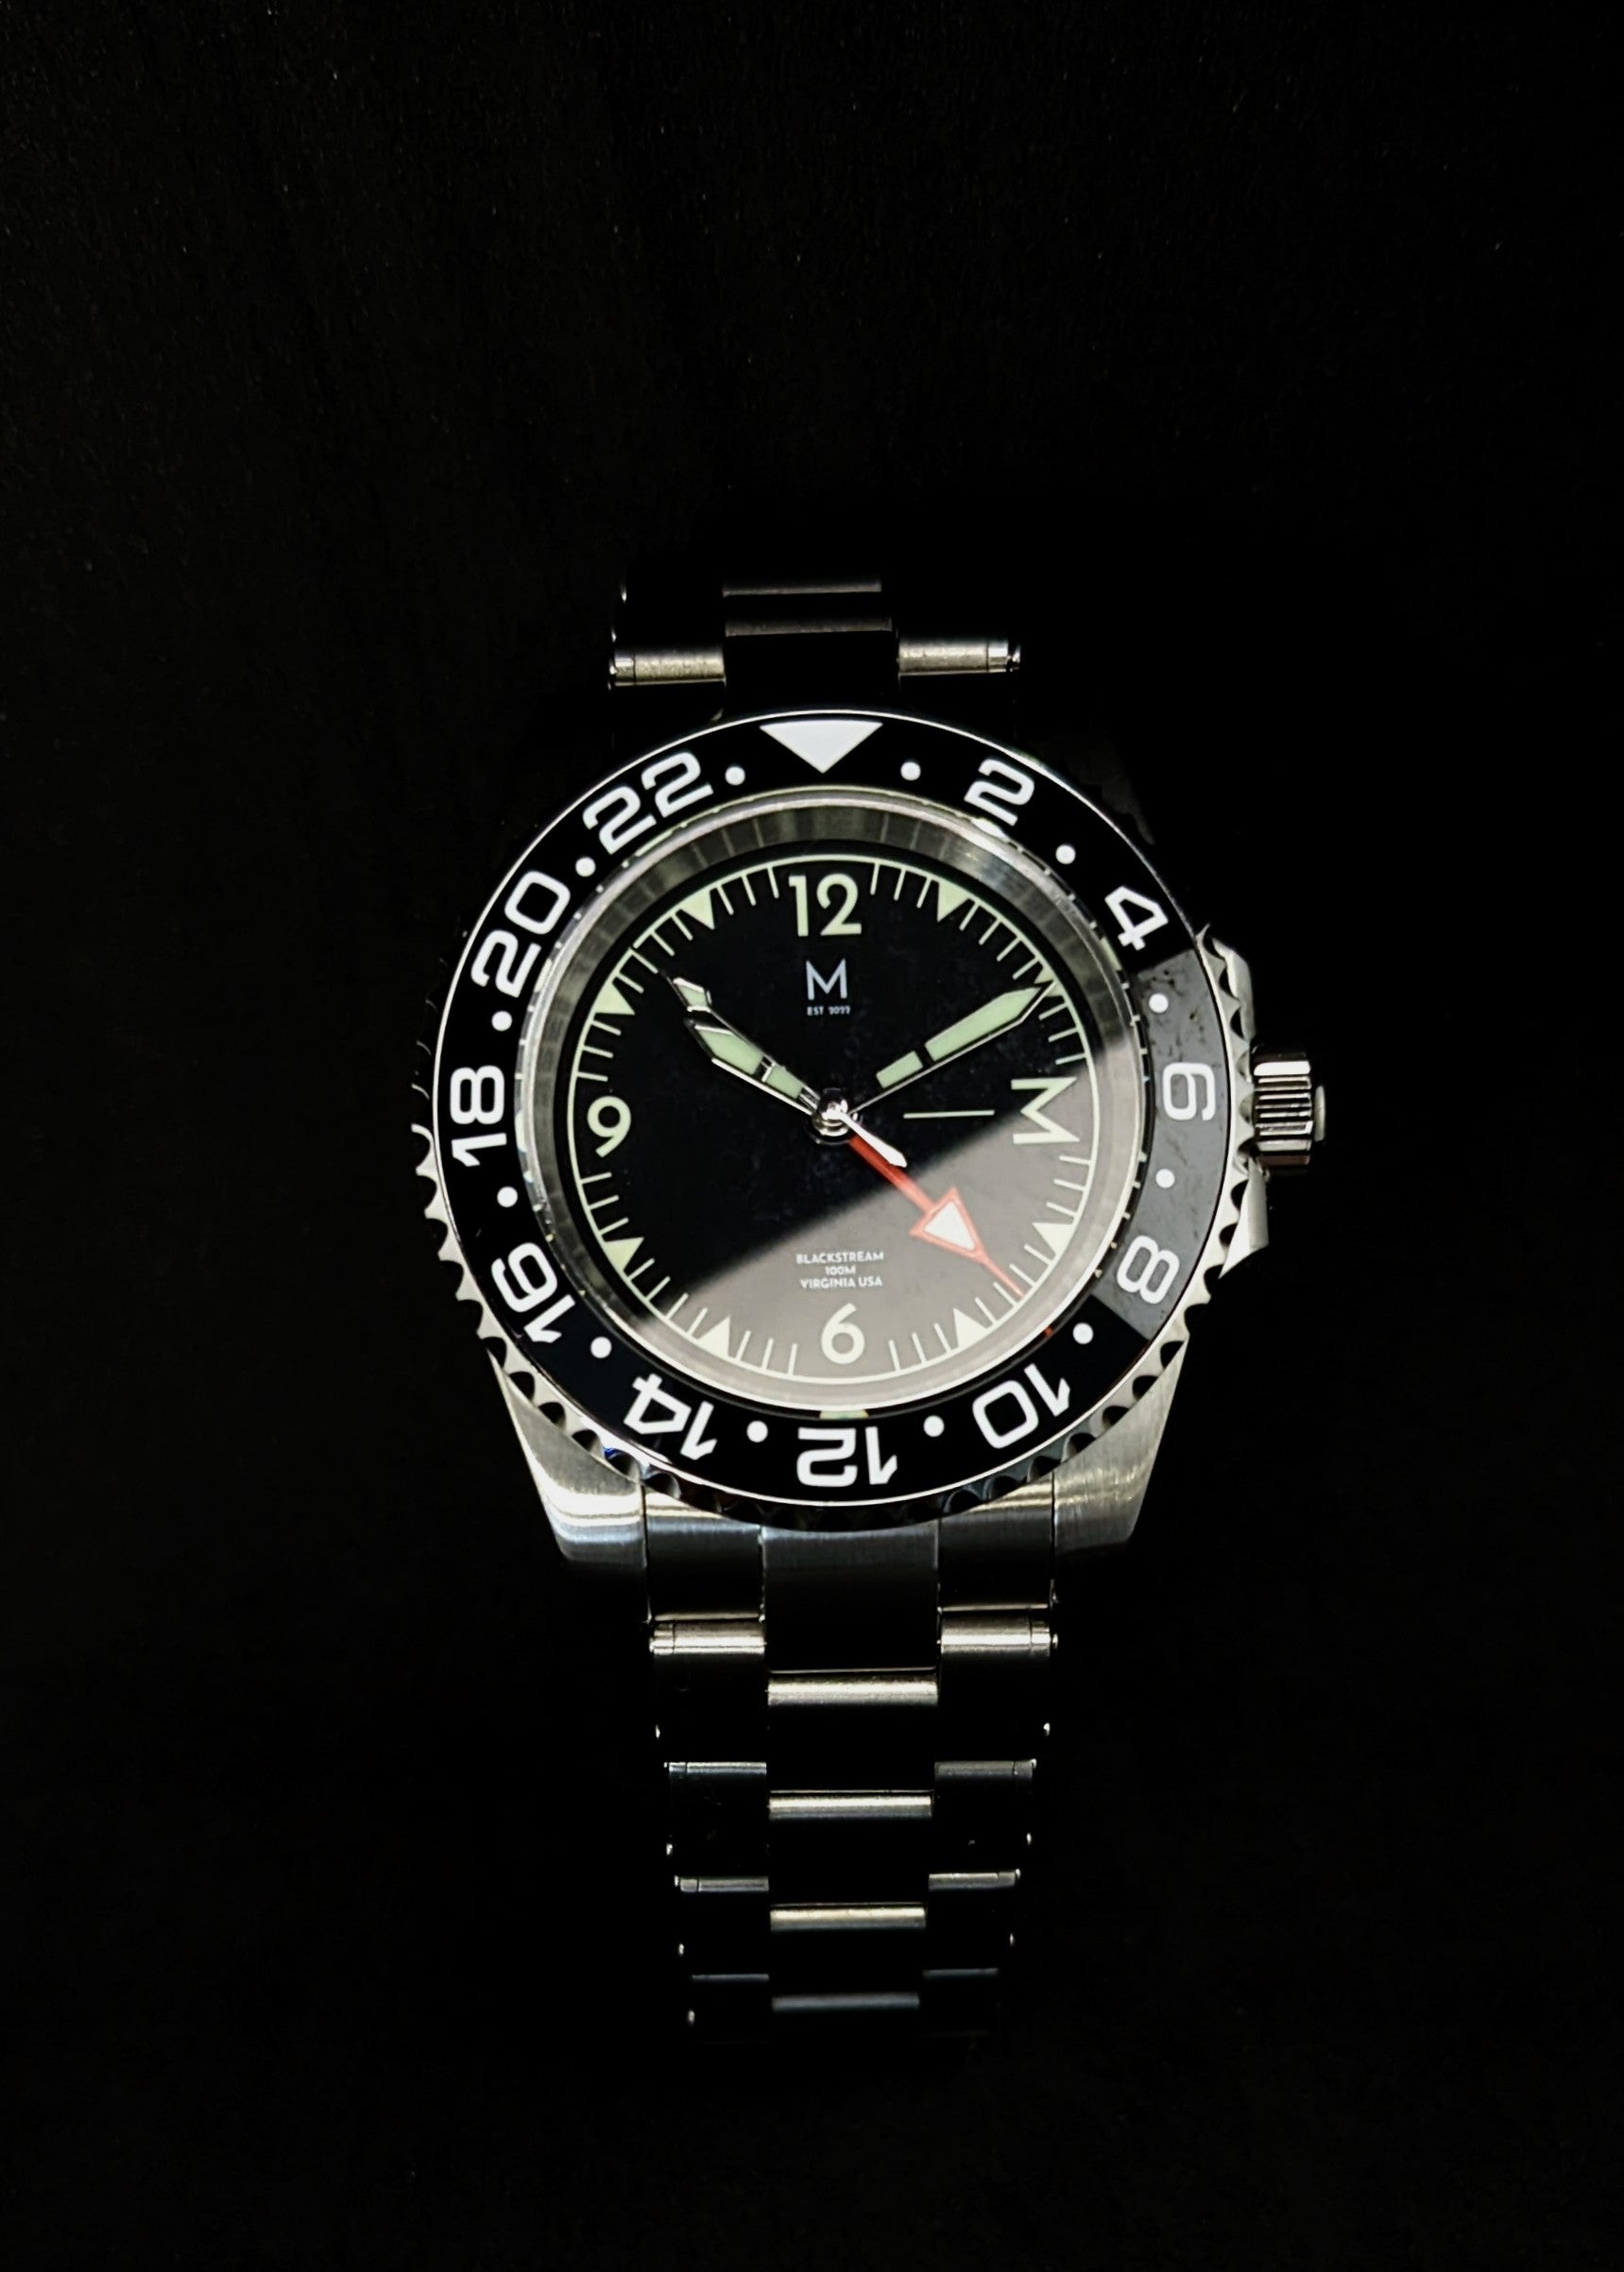 The Blackstream GMT Stylish Watch by Monterey Watch Co